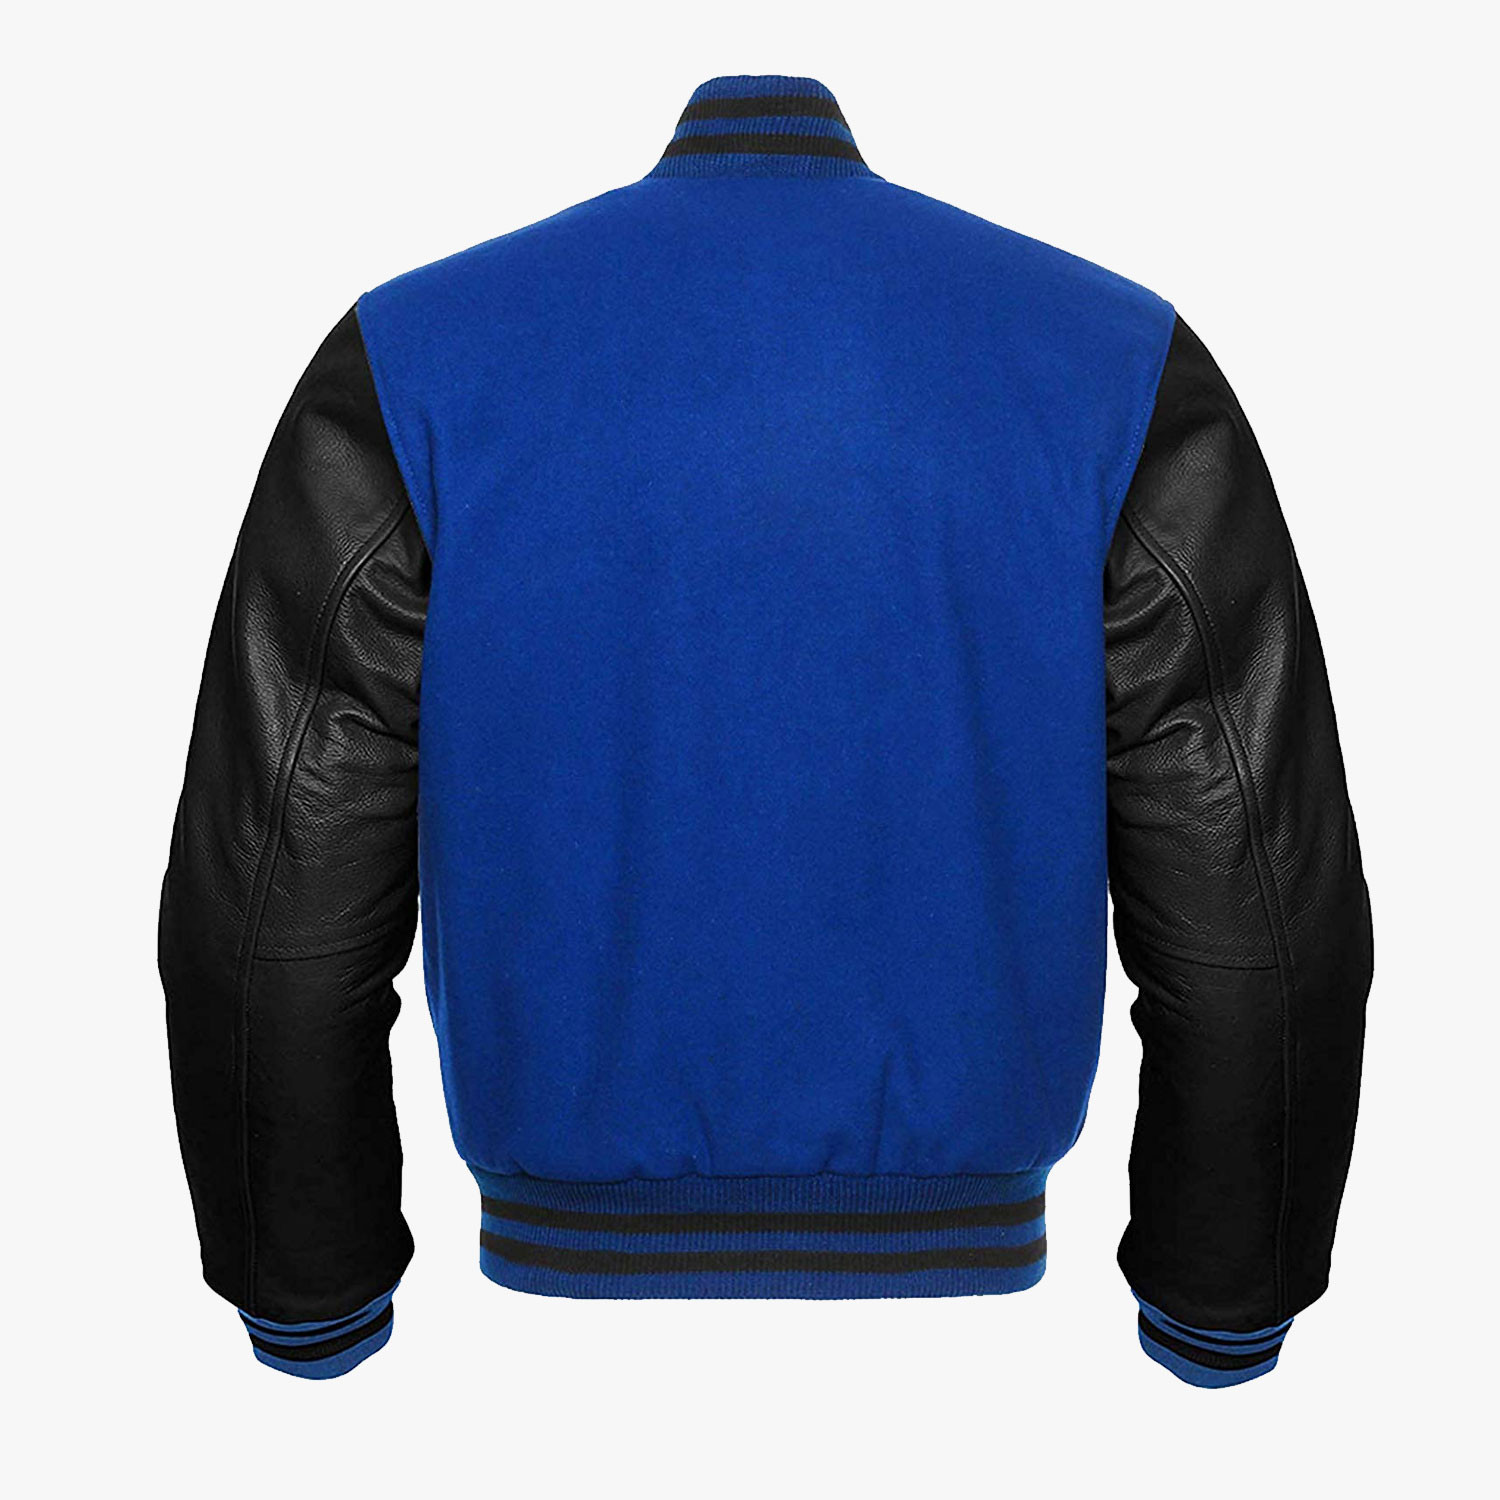 Contrast Leather Sleeve Varsity Jacket, BLUE